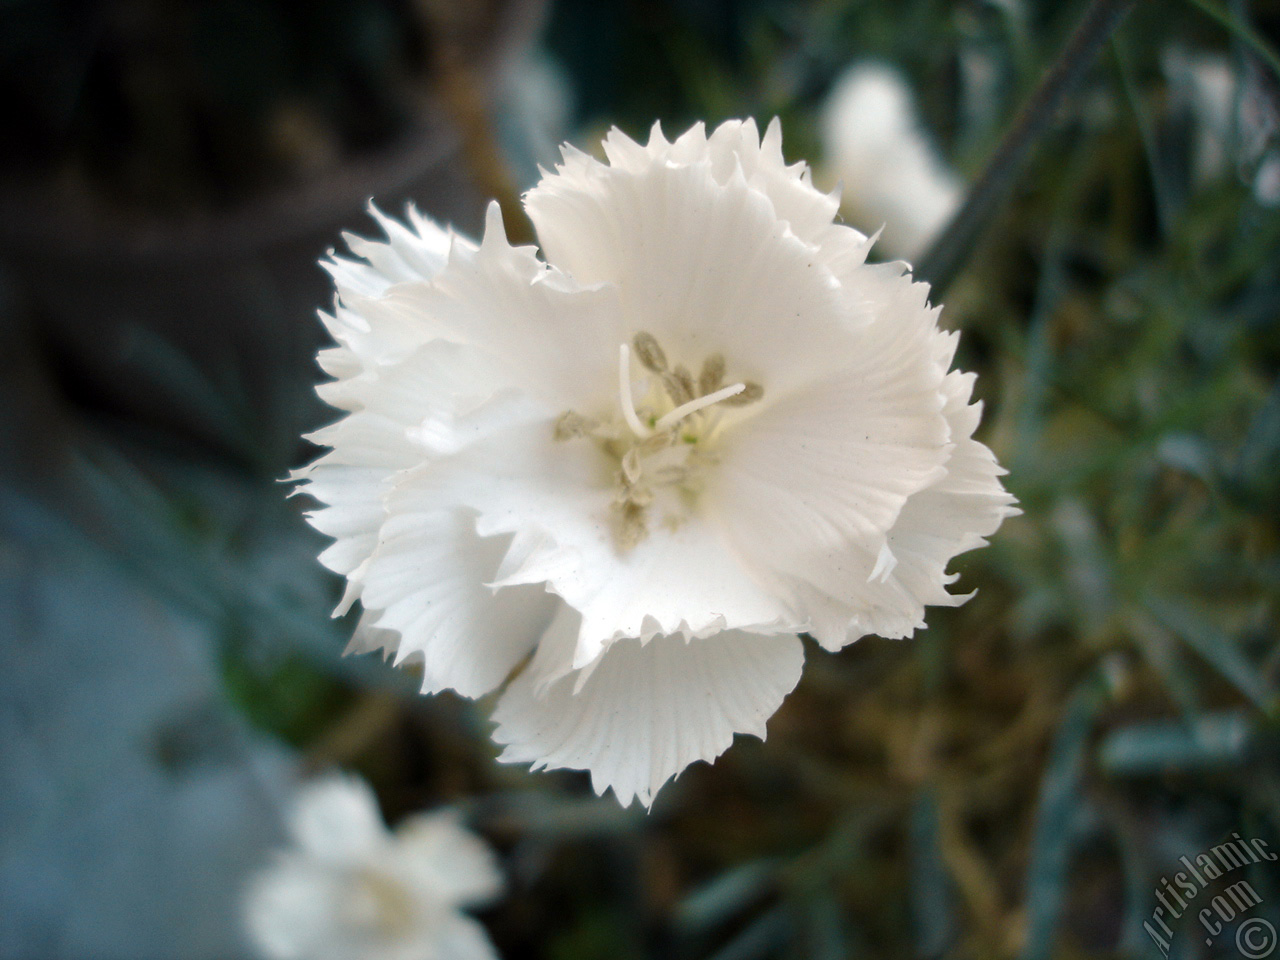 White color Carnation -Clove Pink- flower.
